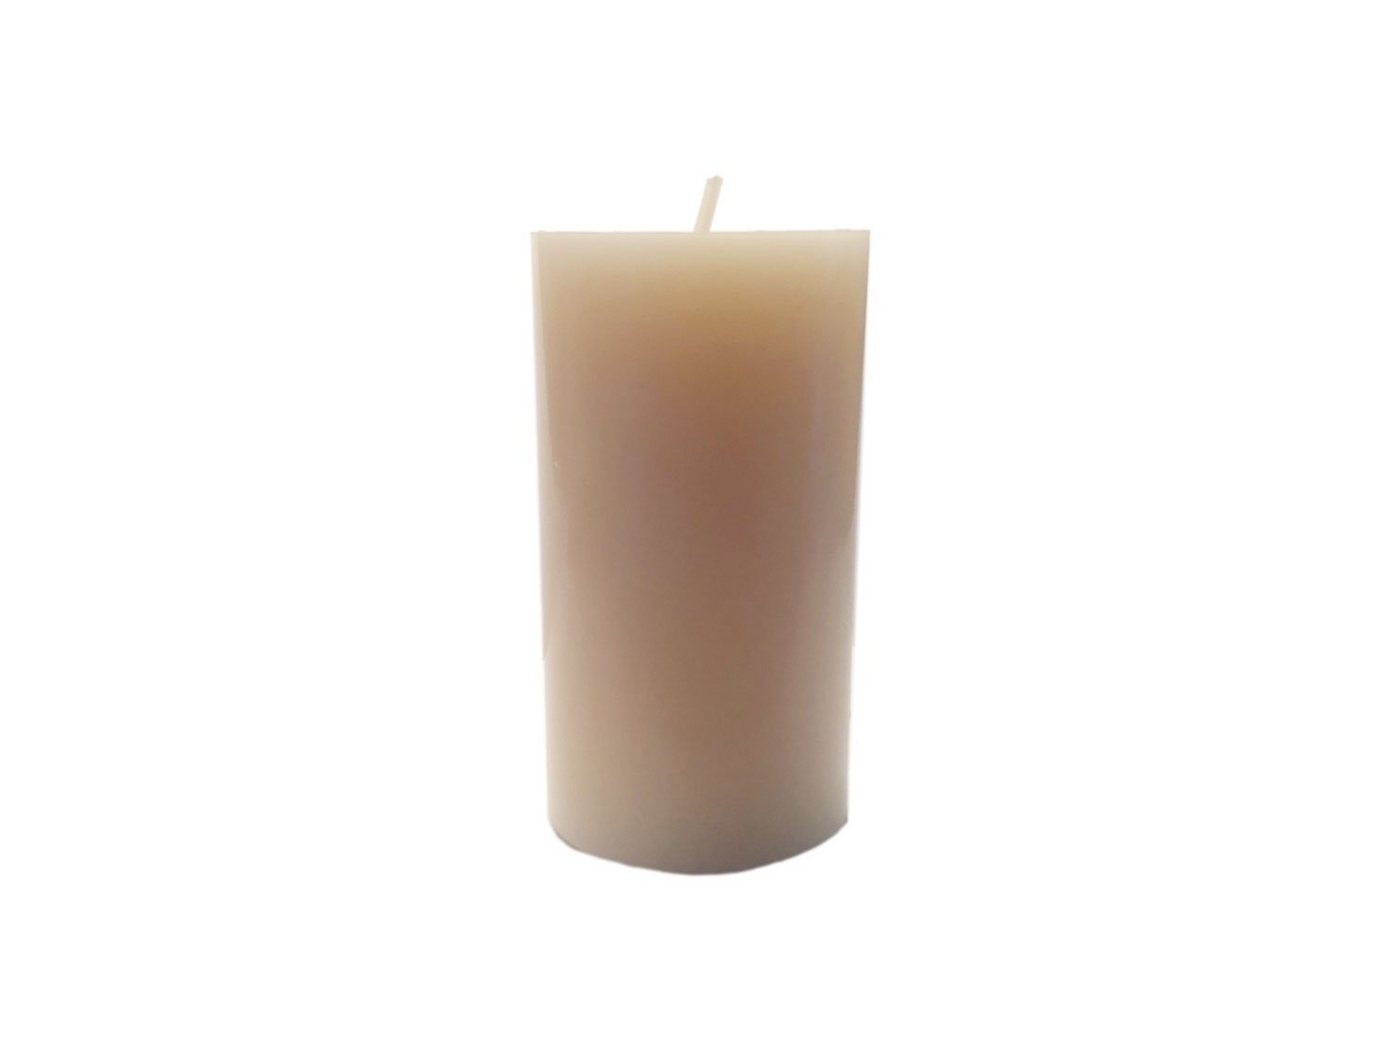 Engels Kerzen Stumpenkerze stumpenkerze gegossen engels kerzen Ø 8 x H 15 cm 82 Std mit brennstop von Engels Kerzen